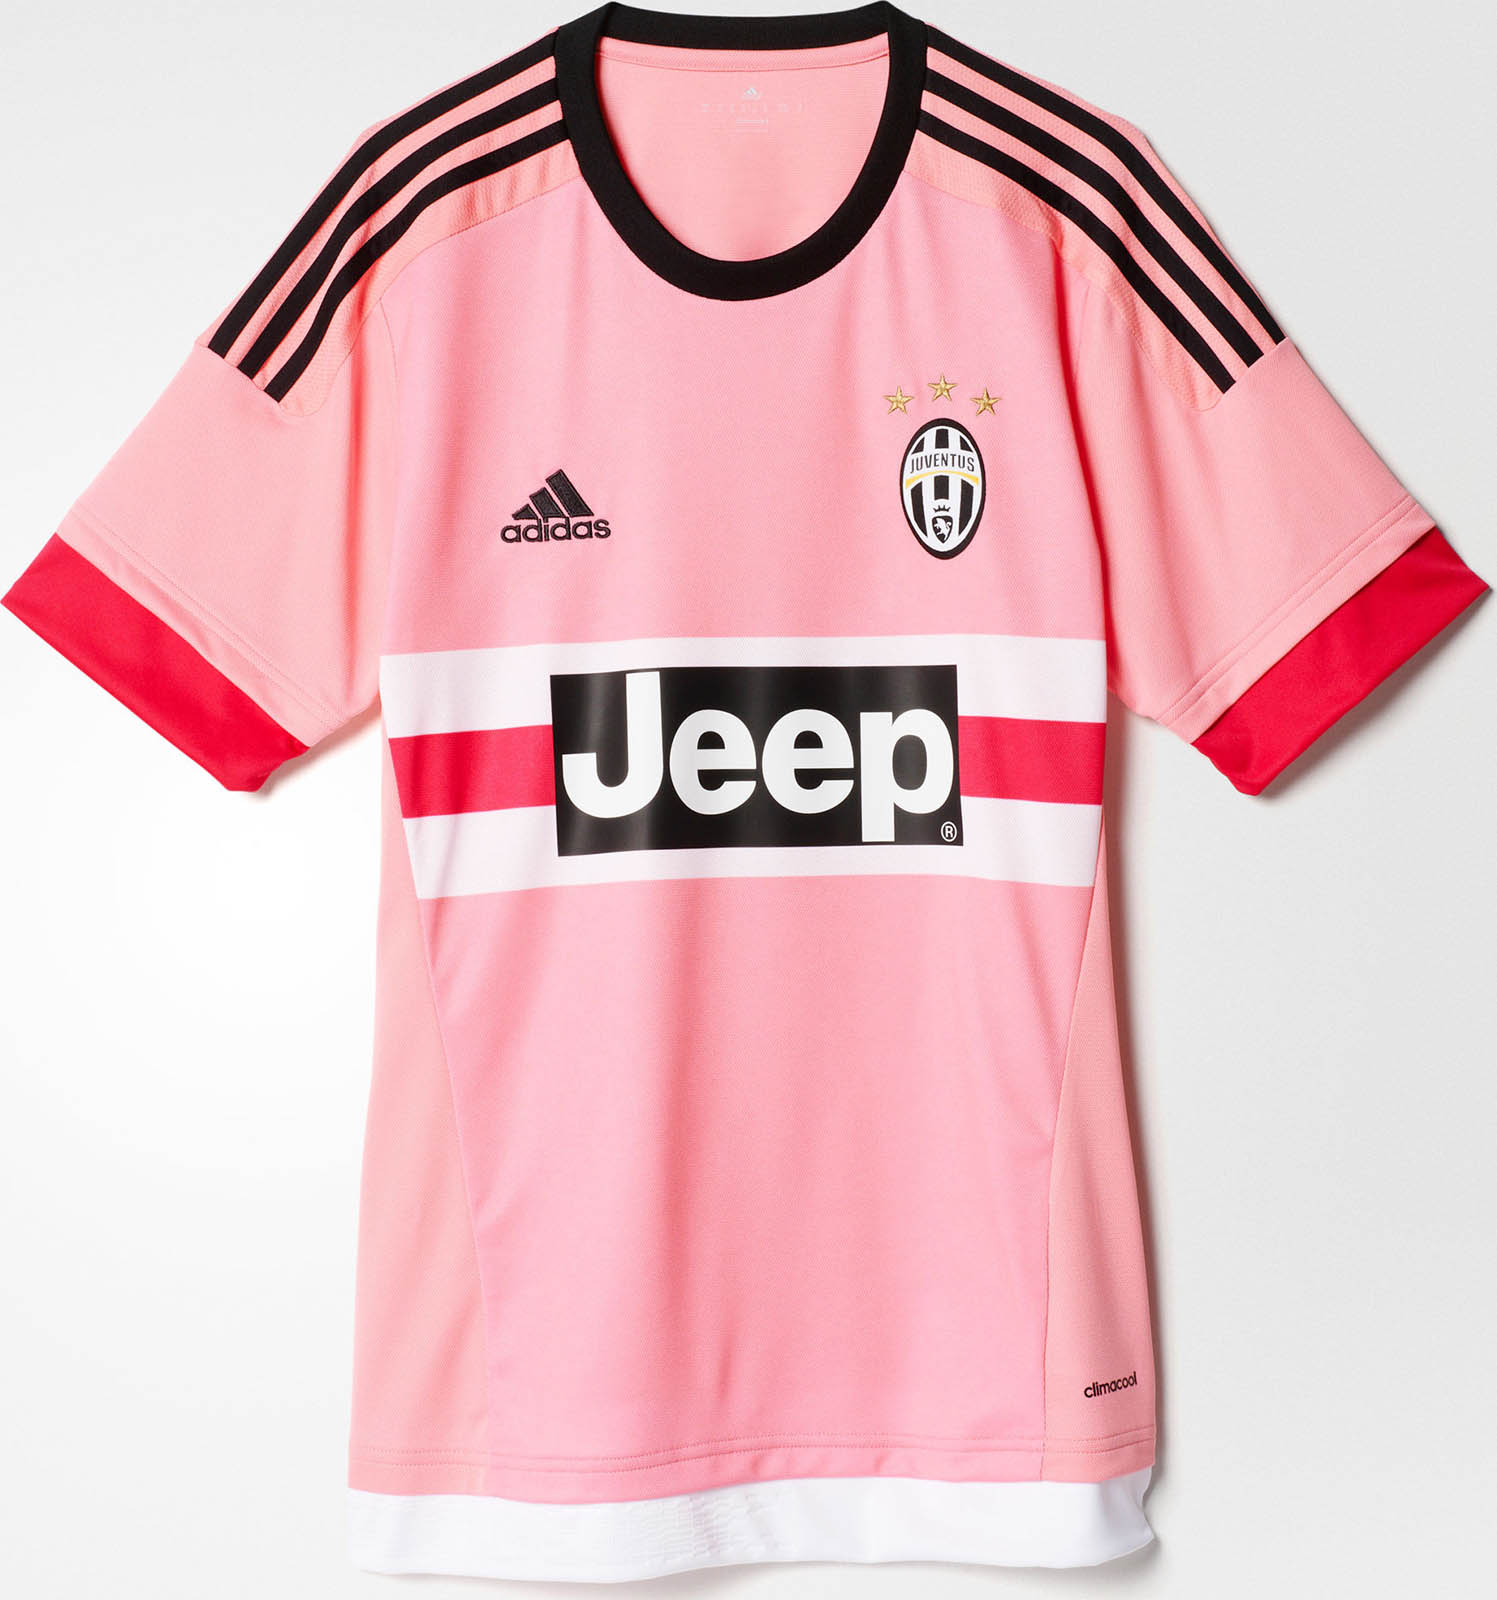 Besluit overzien Cerebrum Pink Adidas Juventus 15-16 Away Kit Released - Footy Headlines